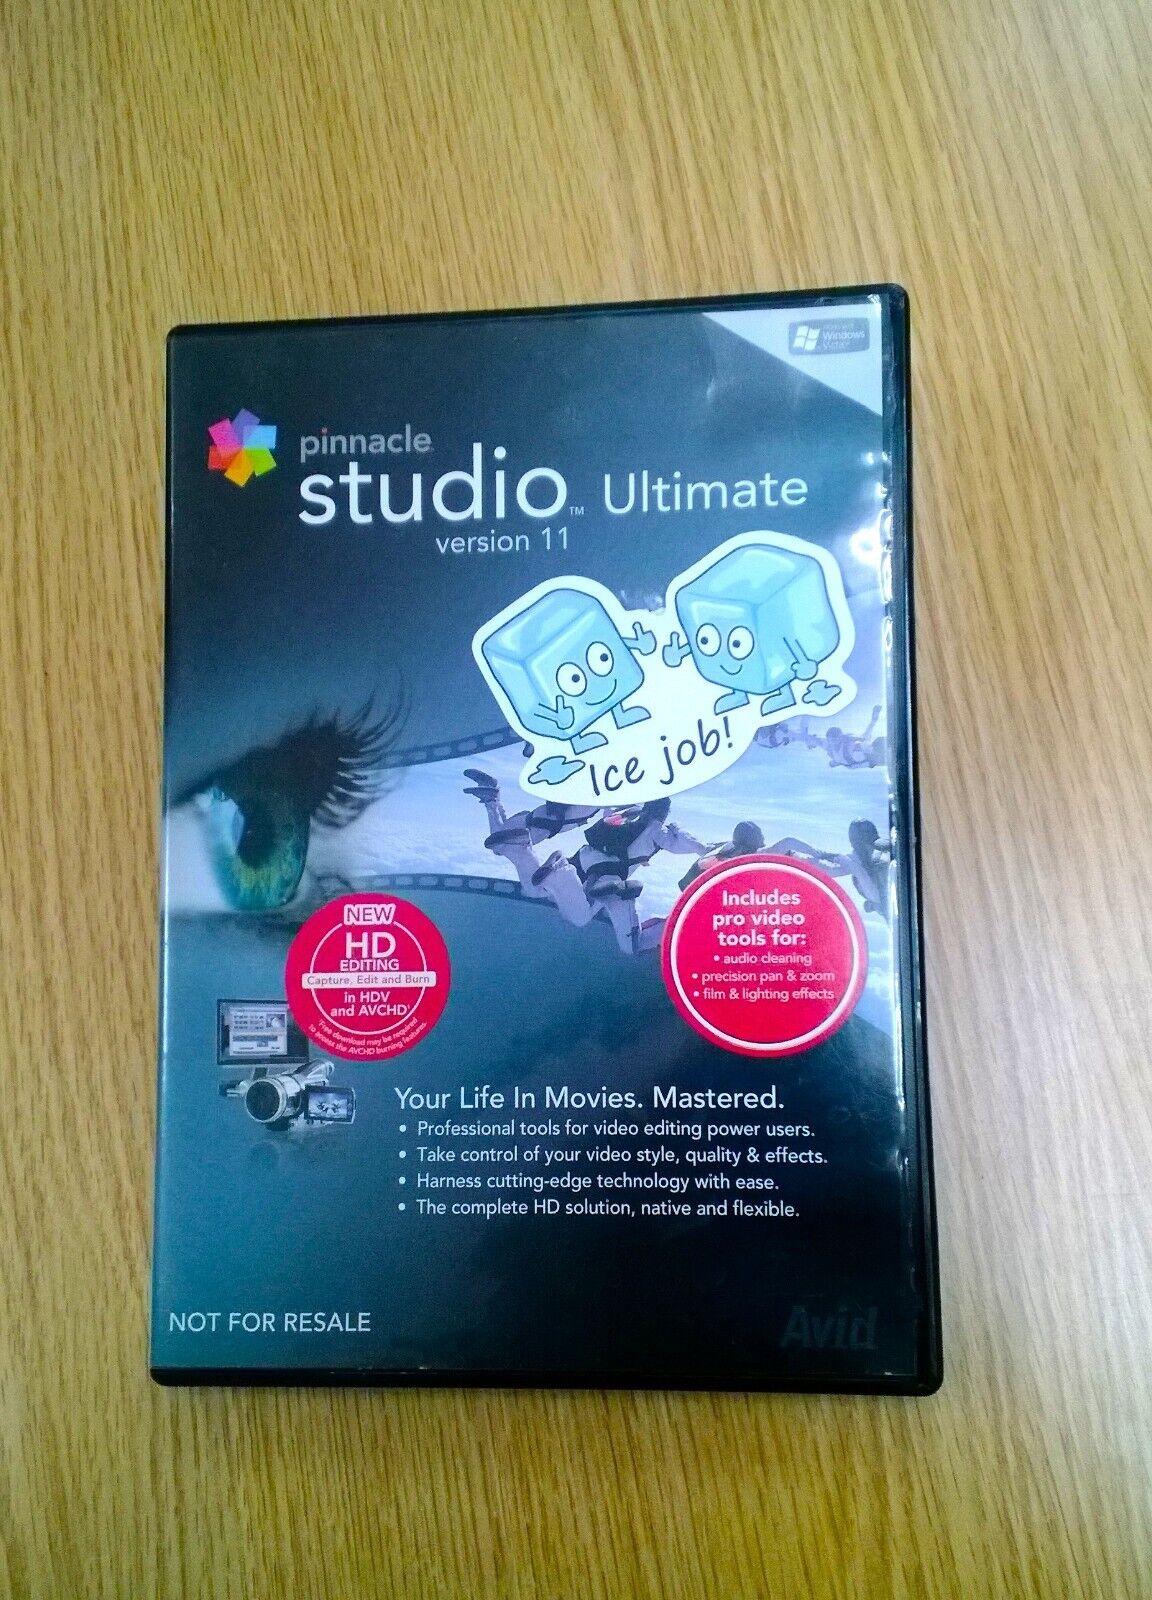 PINNACLE STUDIO ULTIMATE Version 11 product key WINDOWS XP VISTA BONUS DVD PLUS